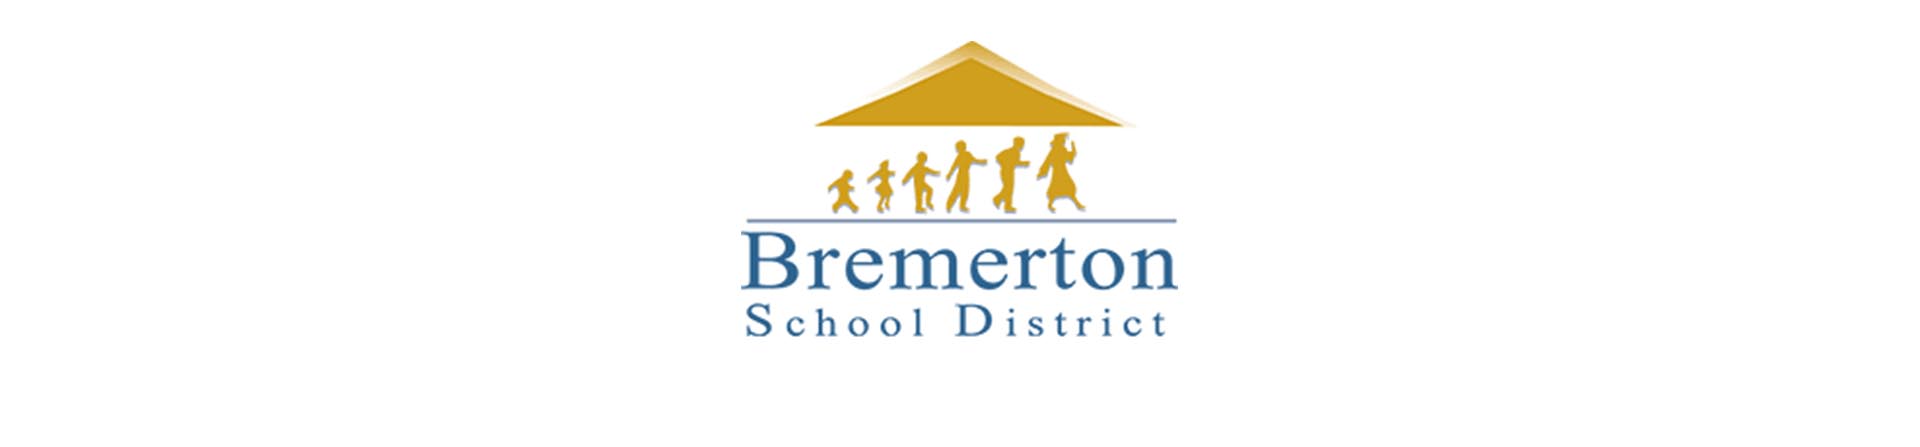 Bremerton School District Monitors & Secures Google Workspace